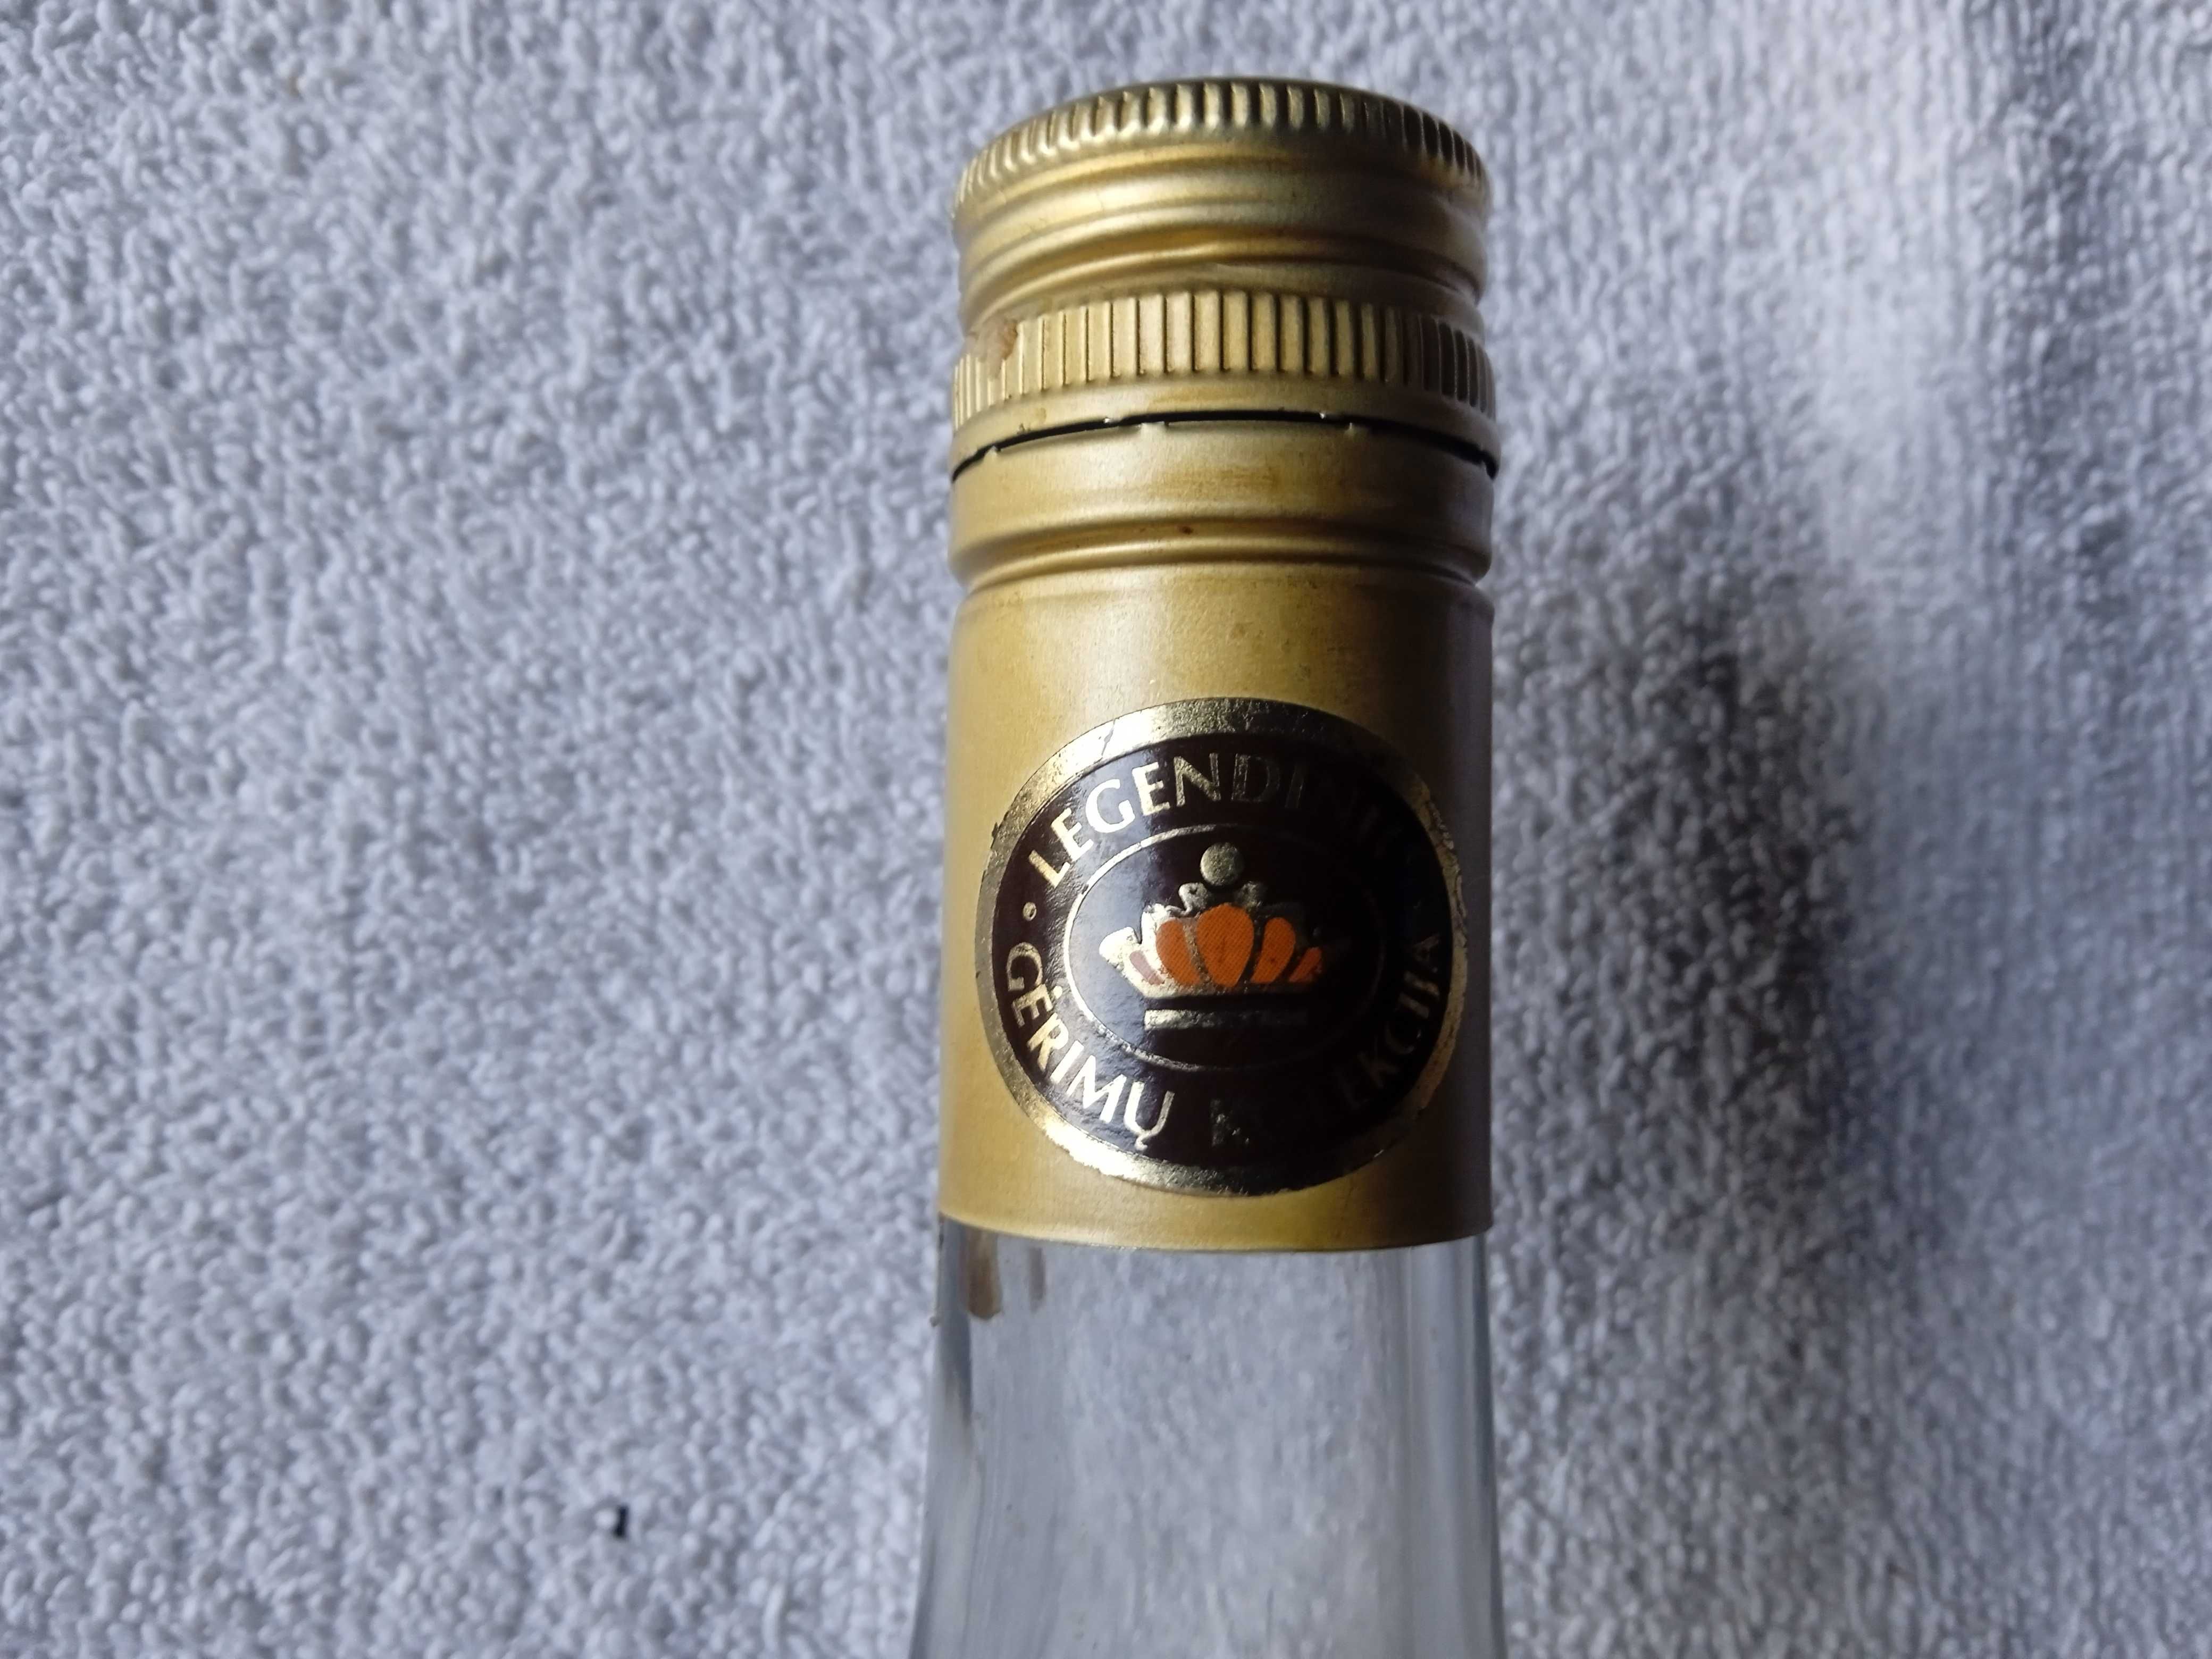 Kolekcjonerska butelka Benedictinas 0,5 L, 43%, z lat 90-ych XXw